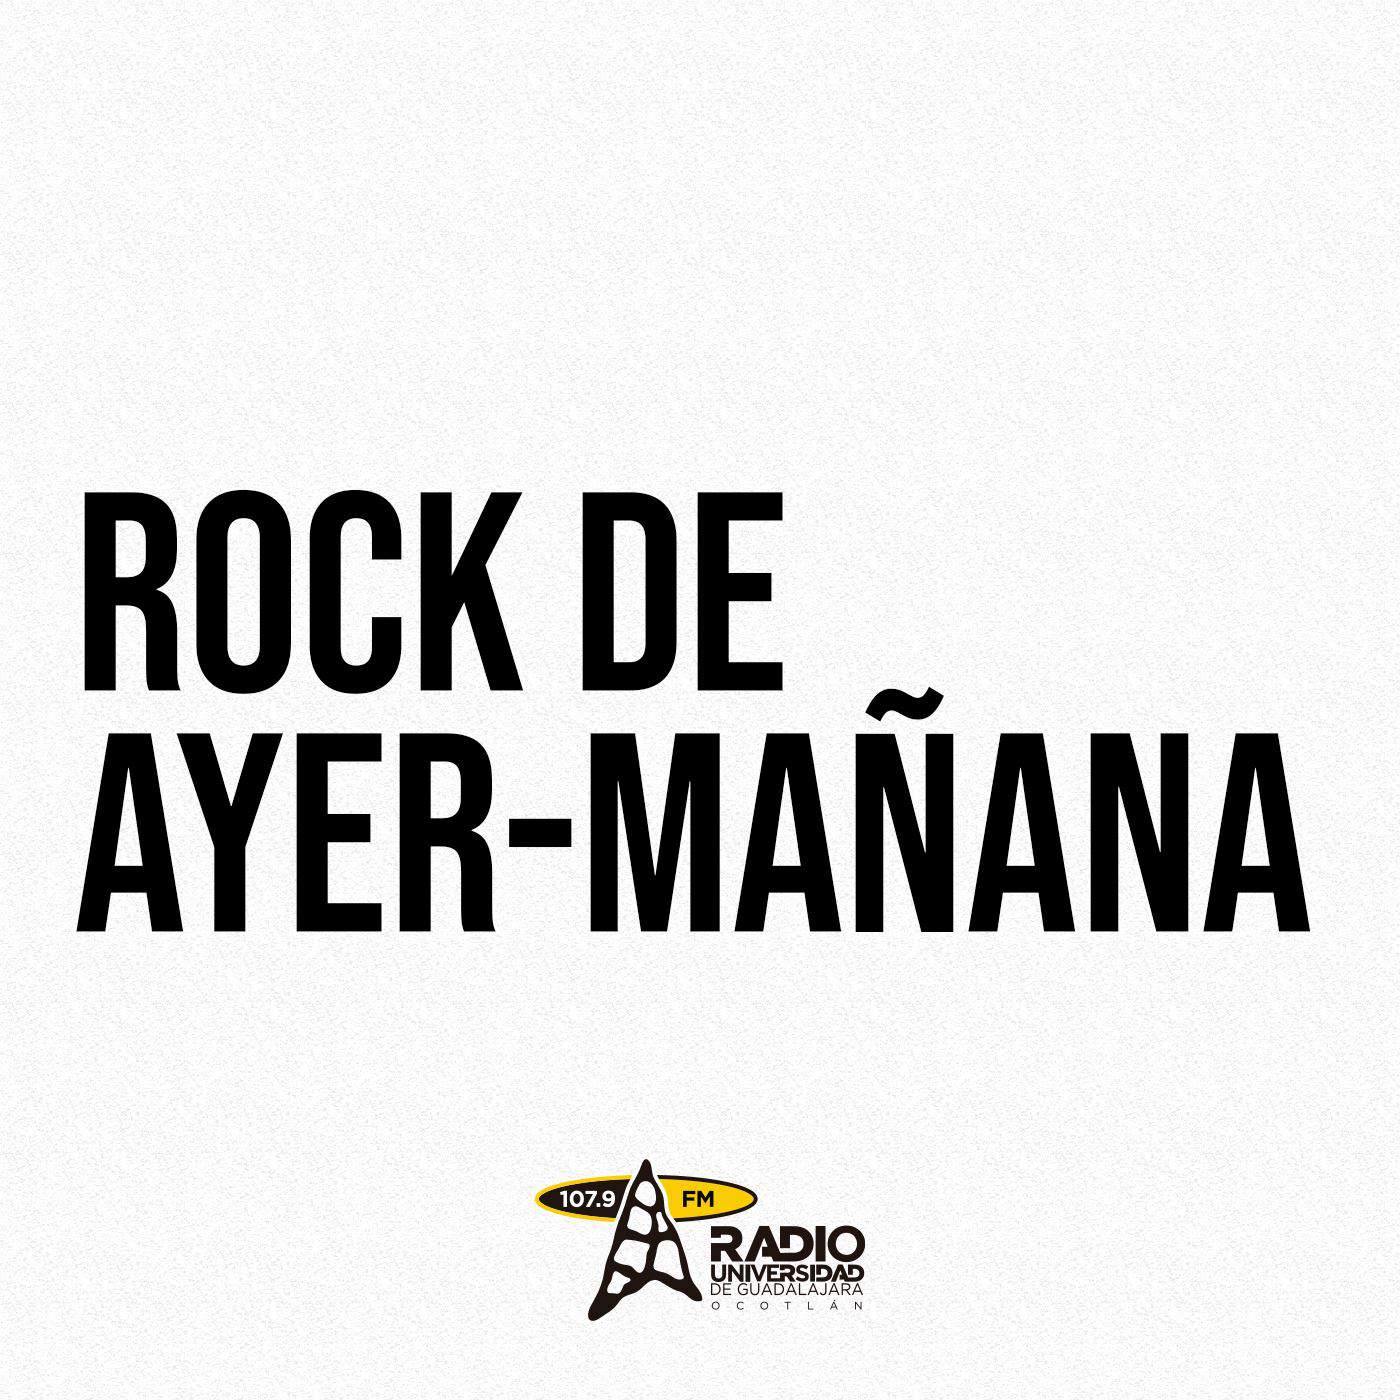 rockdeayer-manana